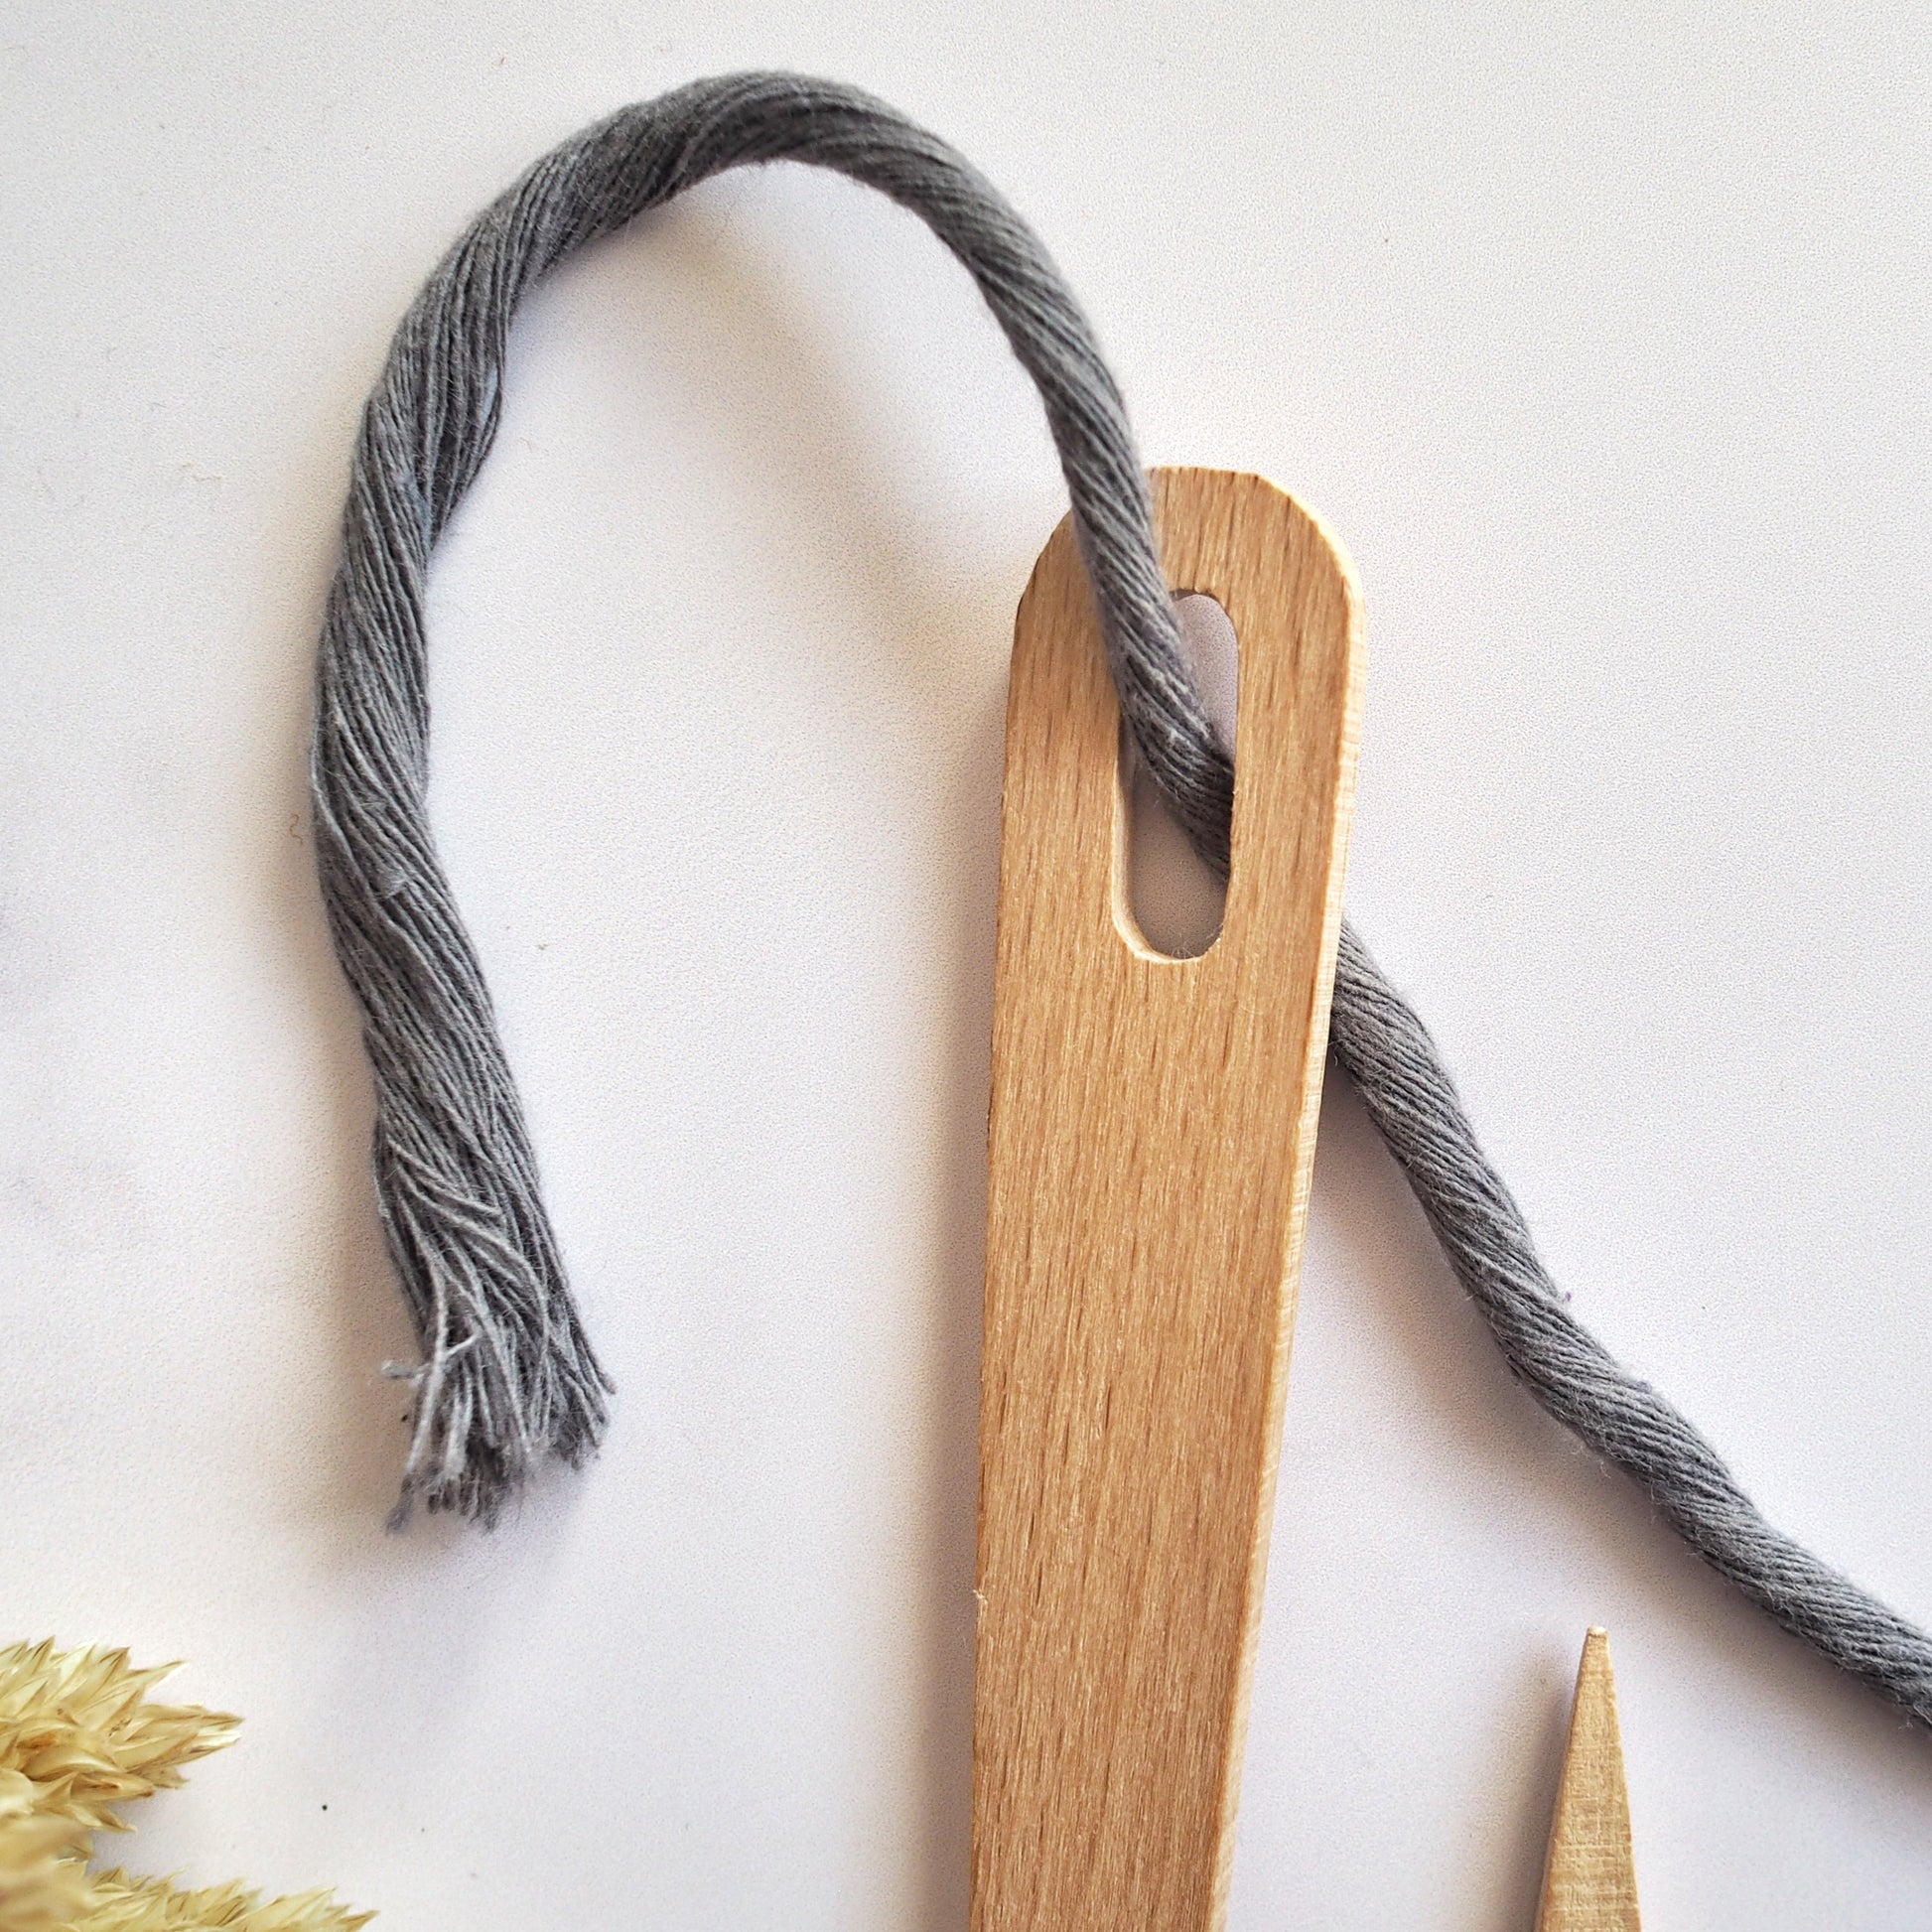 Wooden Weaving Tool Kit The Joyful Studio